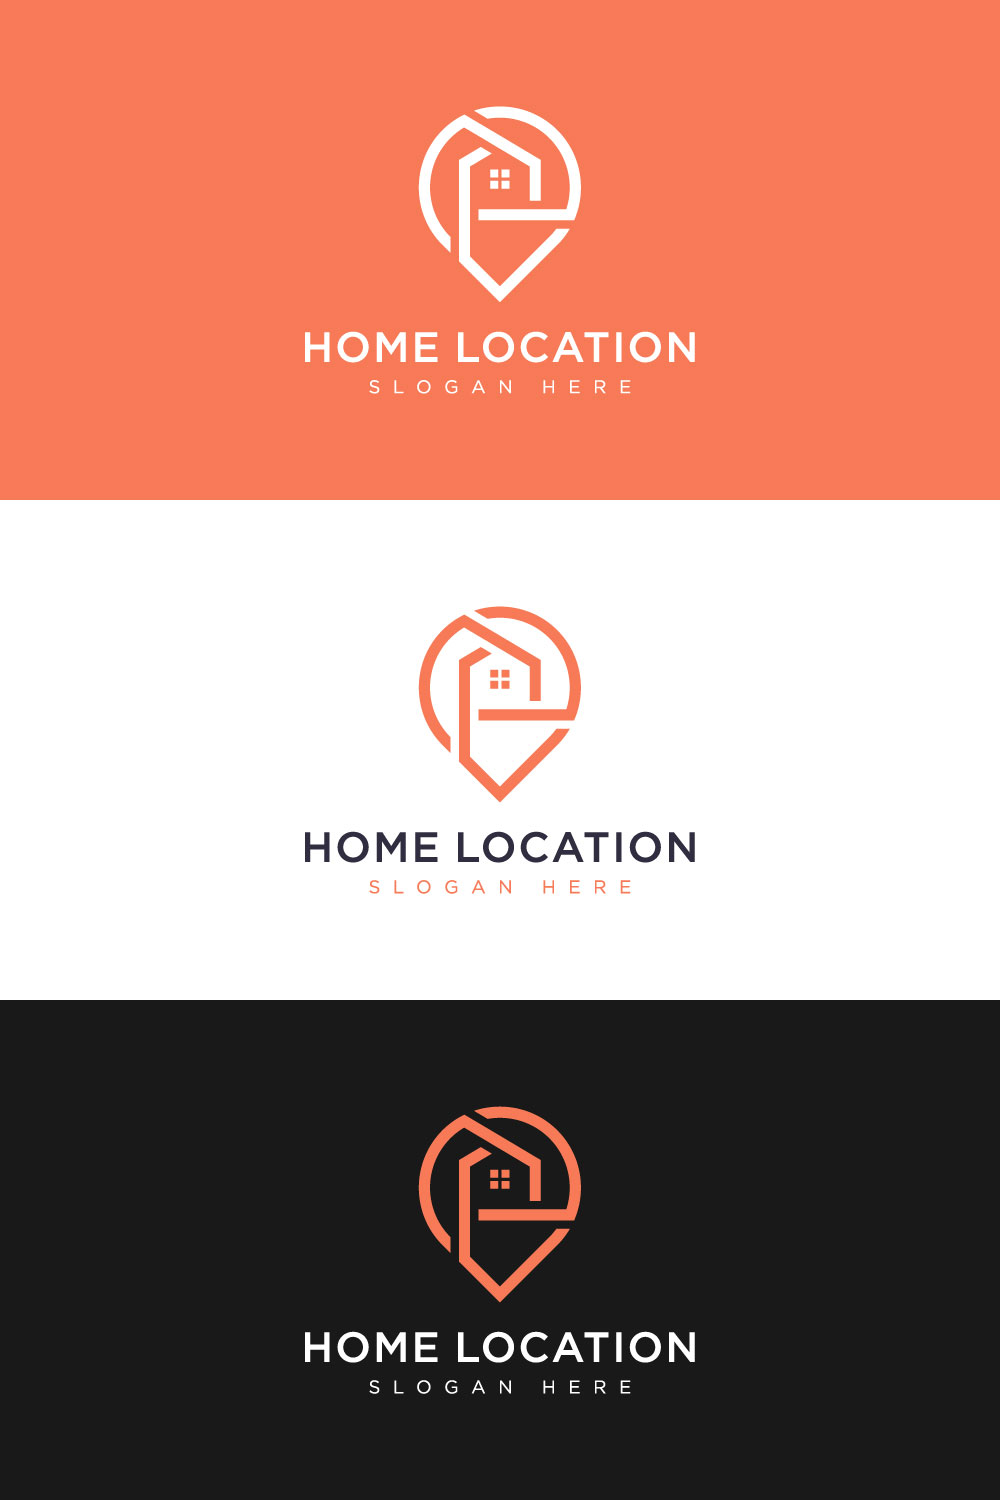 Home Location Logo Templates Pinterest Image.